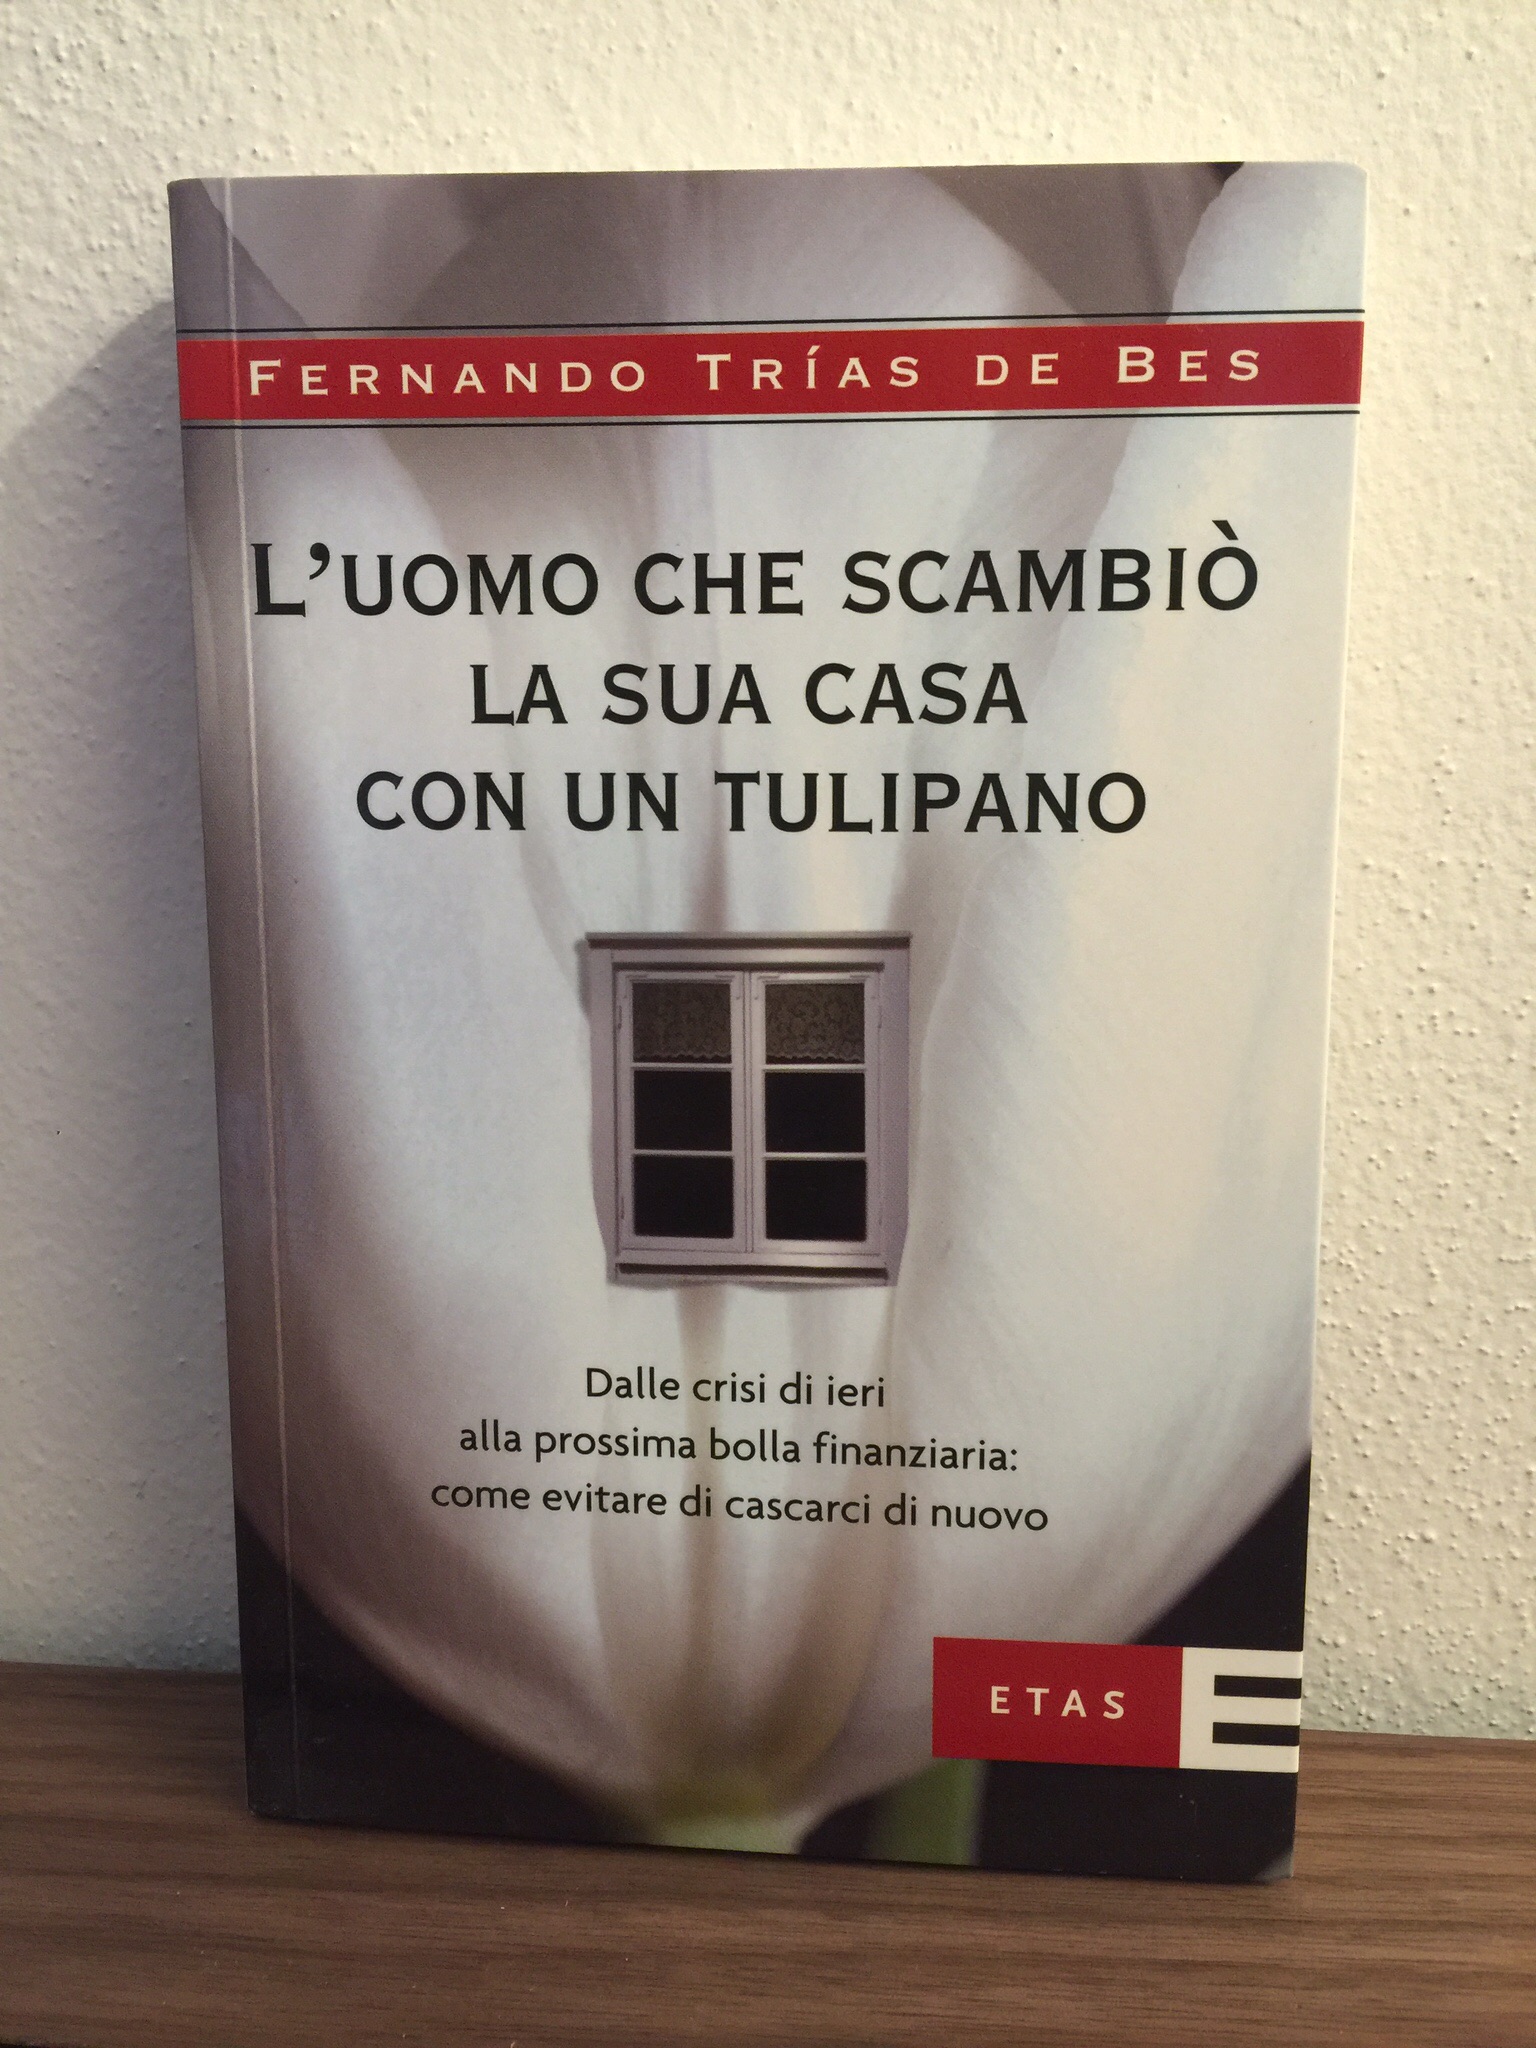 Fernando Trias de Bes – L’uomo che scambiò la sua casa con un tulipano